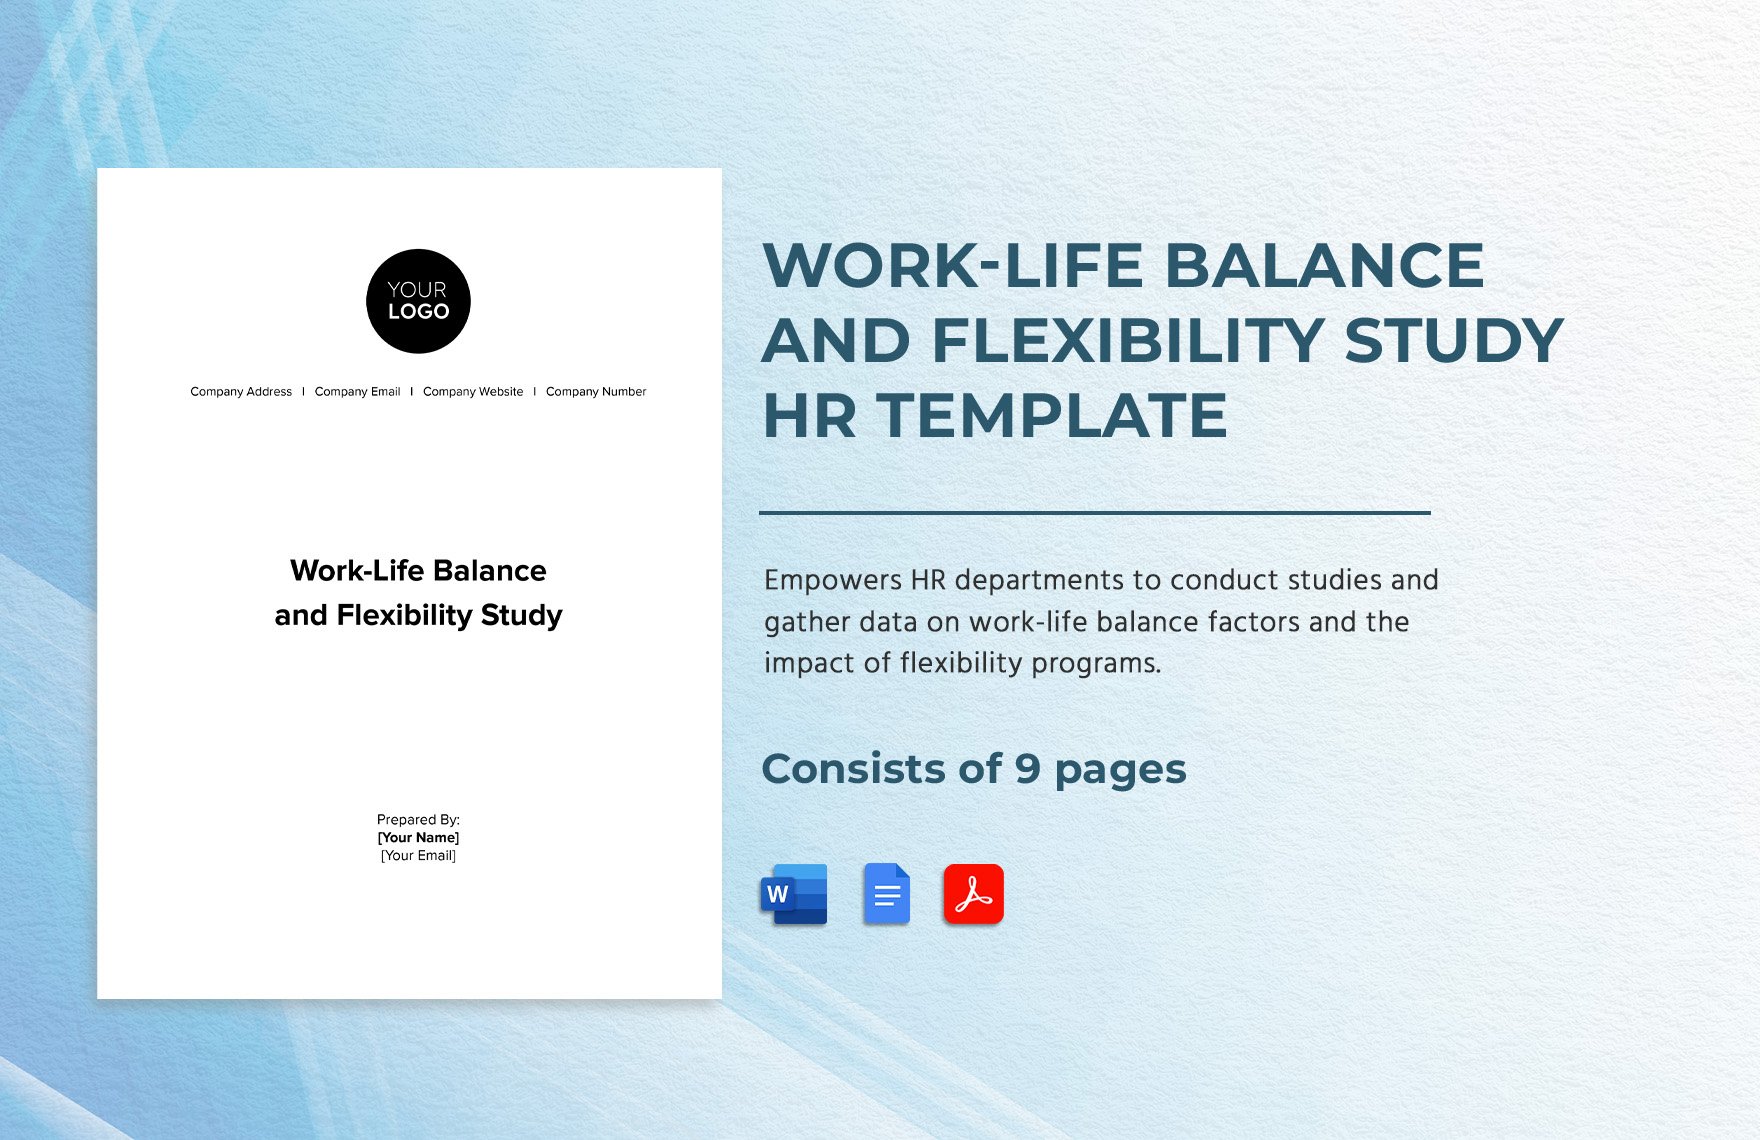 Work-life Balance and Flexibility Study HR Template